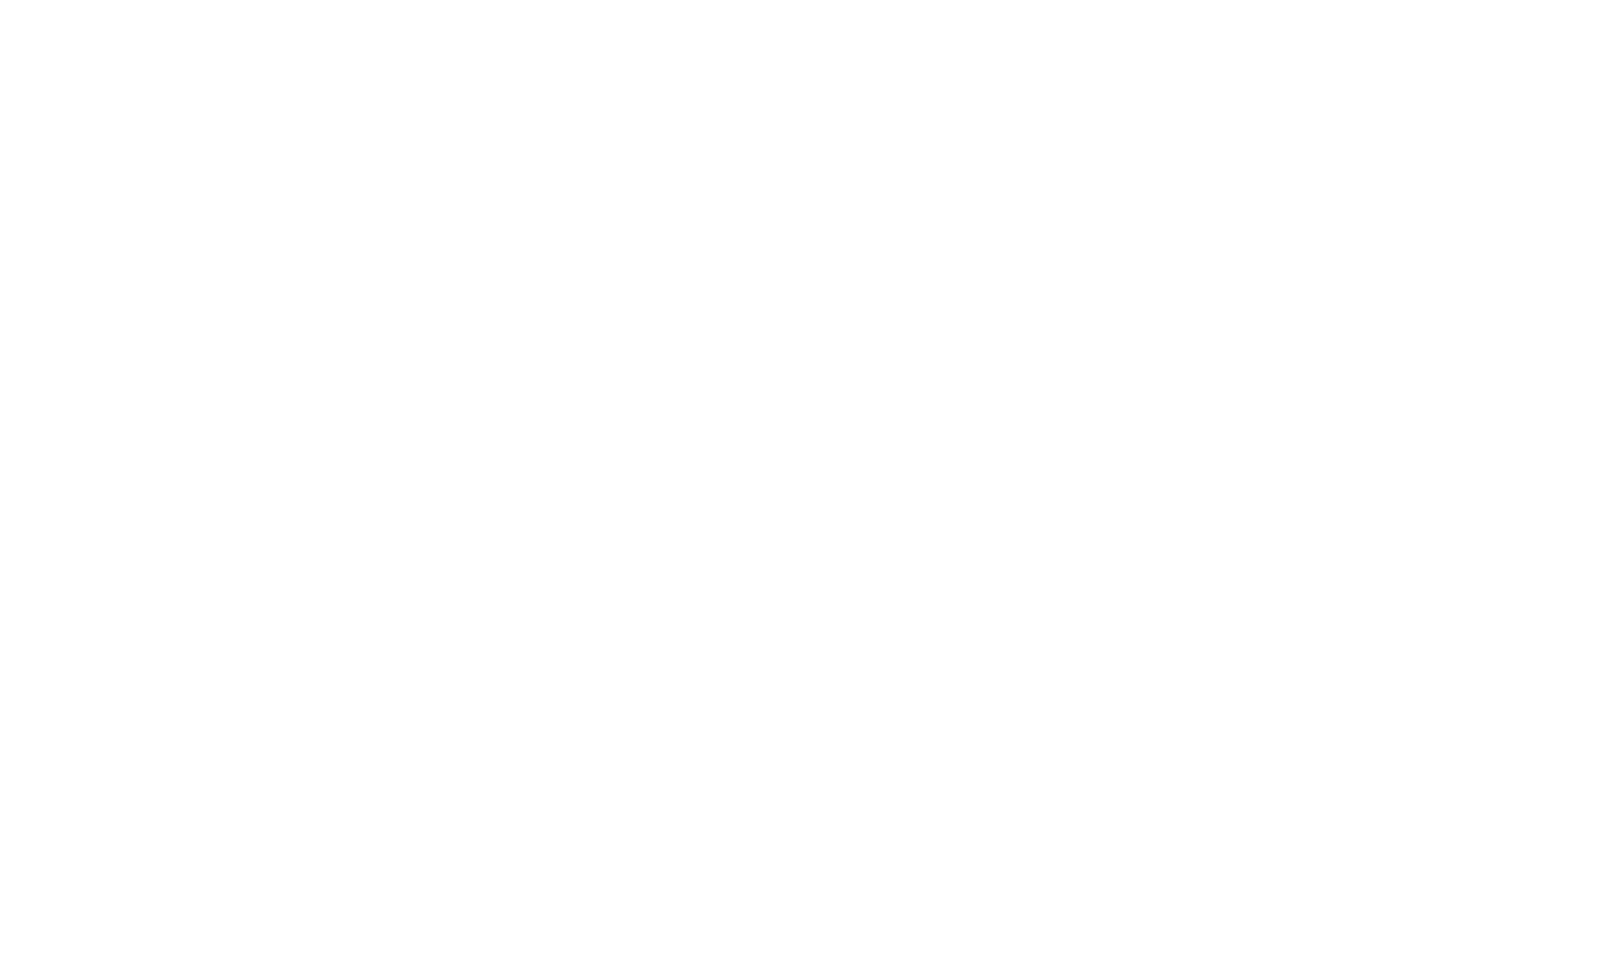 Psicóloga - Carla Ribeiro  CRPSP 86203